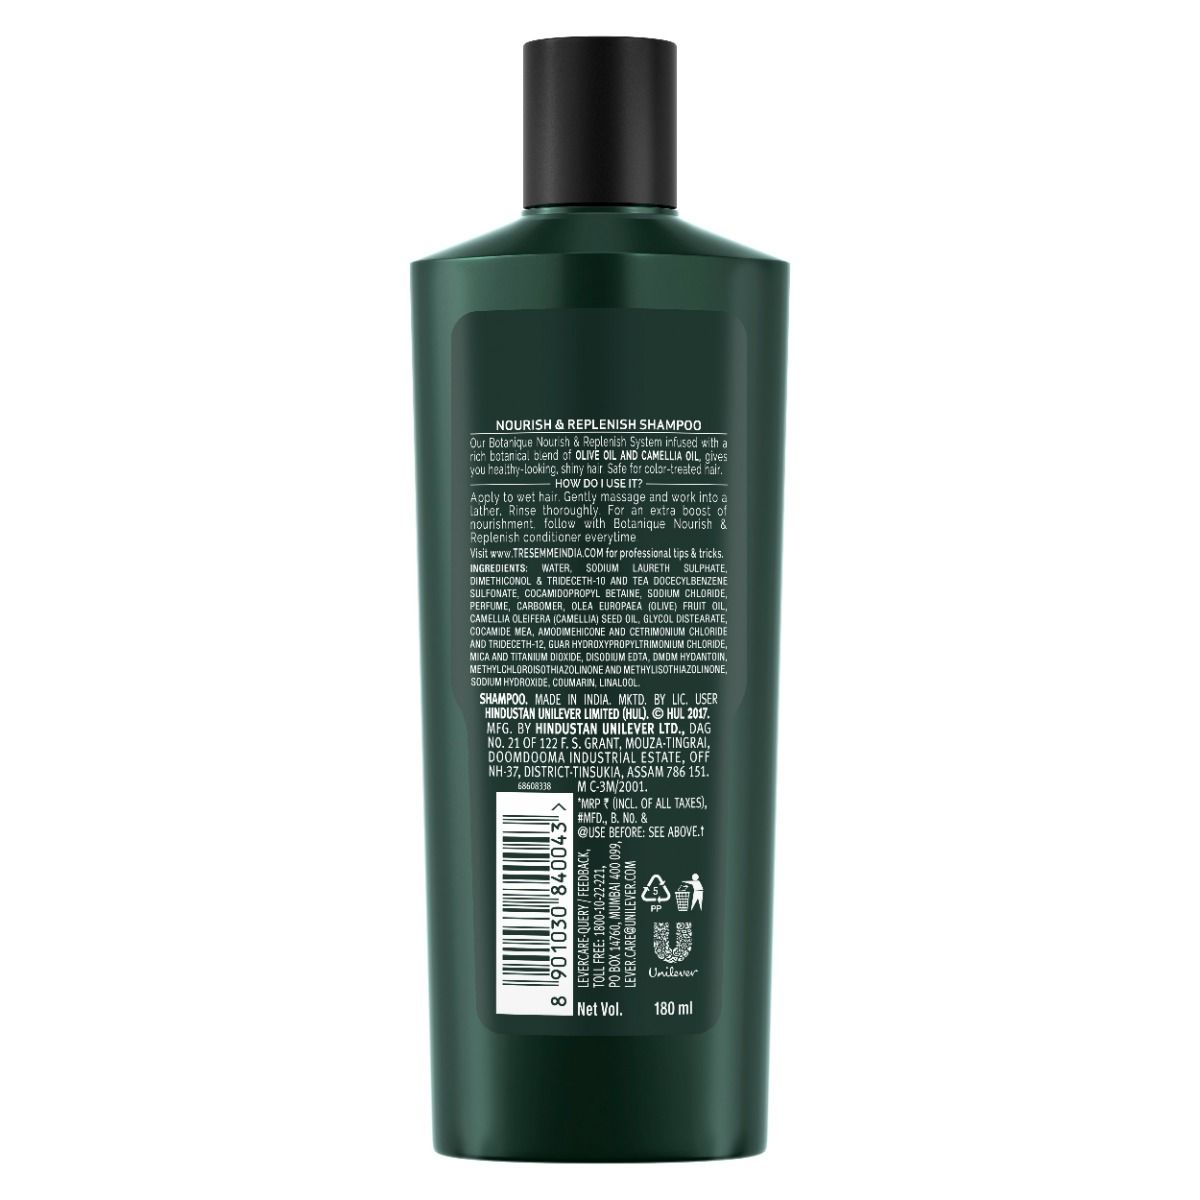 Tresemme Botanique Nourish & Replenish Shampoo, 180 ml, Pack of 1 